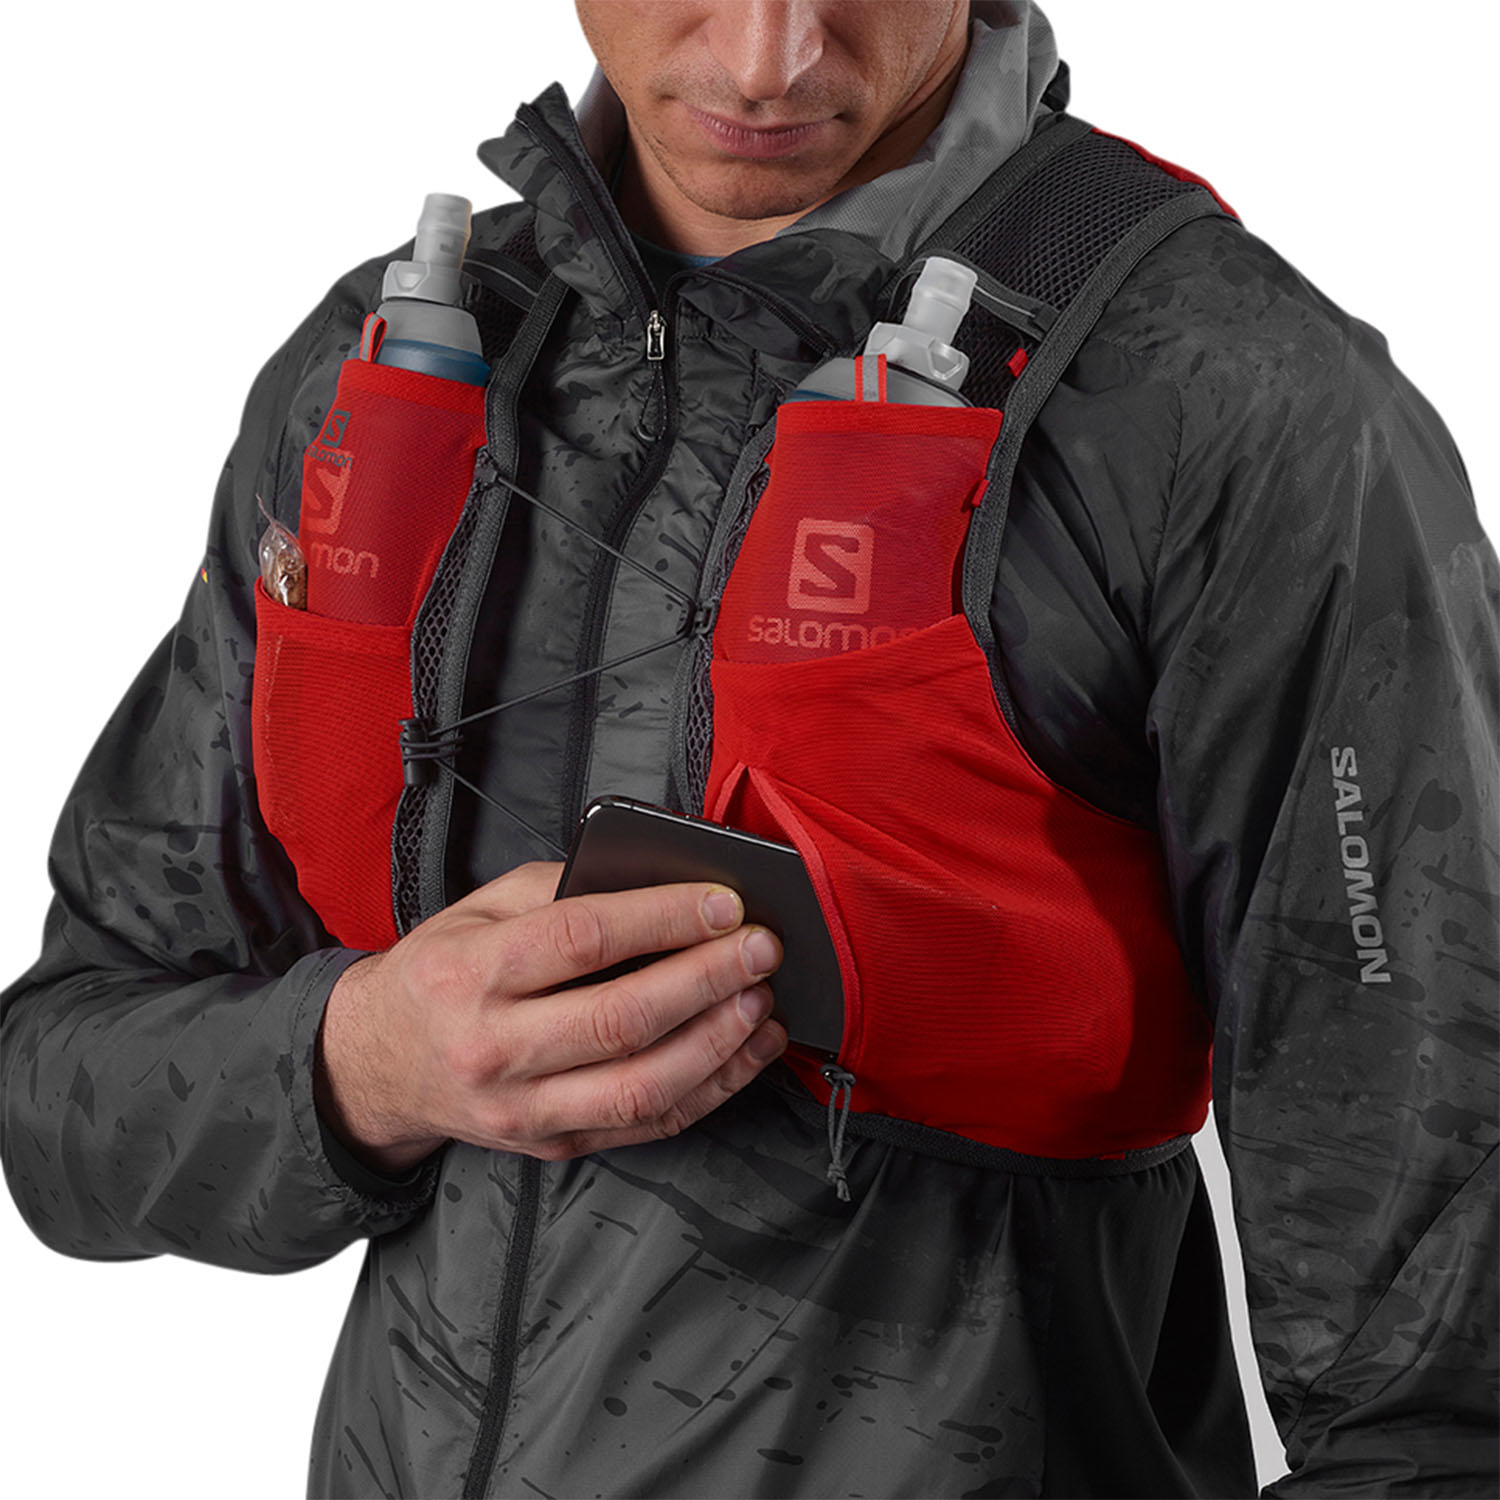  Salomon Active Skin 4 Set Running Hydration Vest, Ebony/Black,  Small : Sports & Outdoors